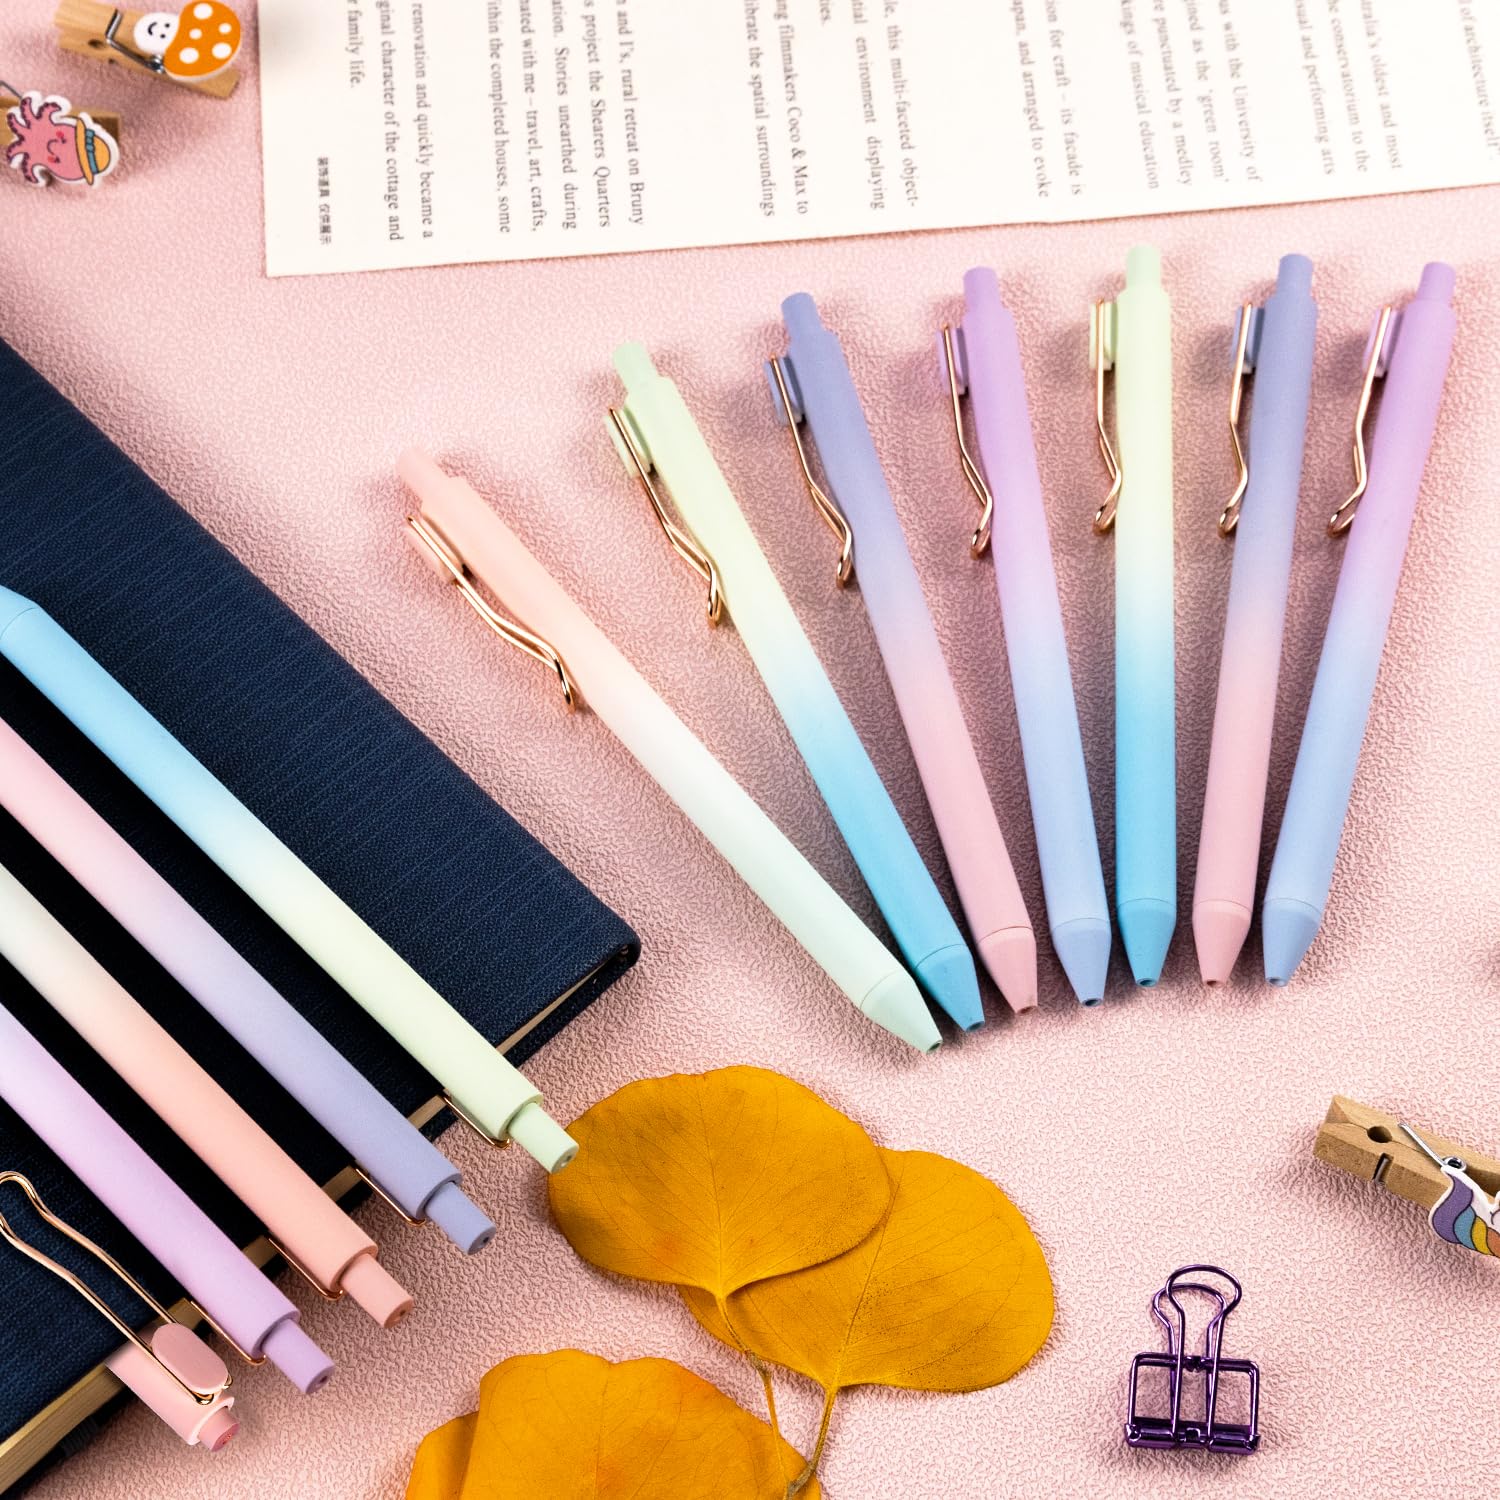 Drawdart Gel Pens, 12 Pcs Smooth Writing Pens No Bleed & Smear, Black Ink Cute Pens Fine Point (0.5mm), Retractable Aesthetic Journaling Pens School Office Supplies for Women & Men